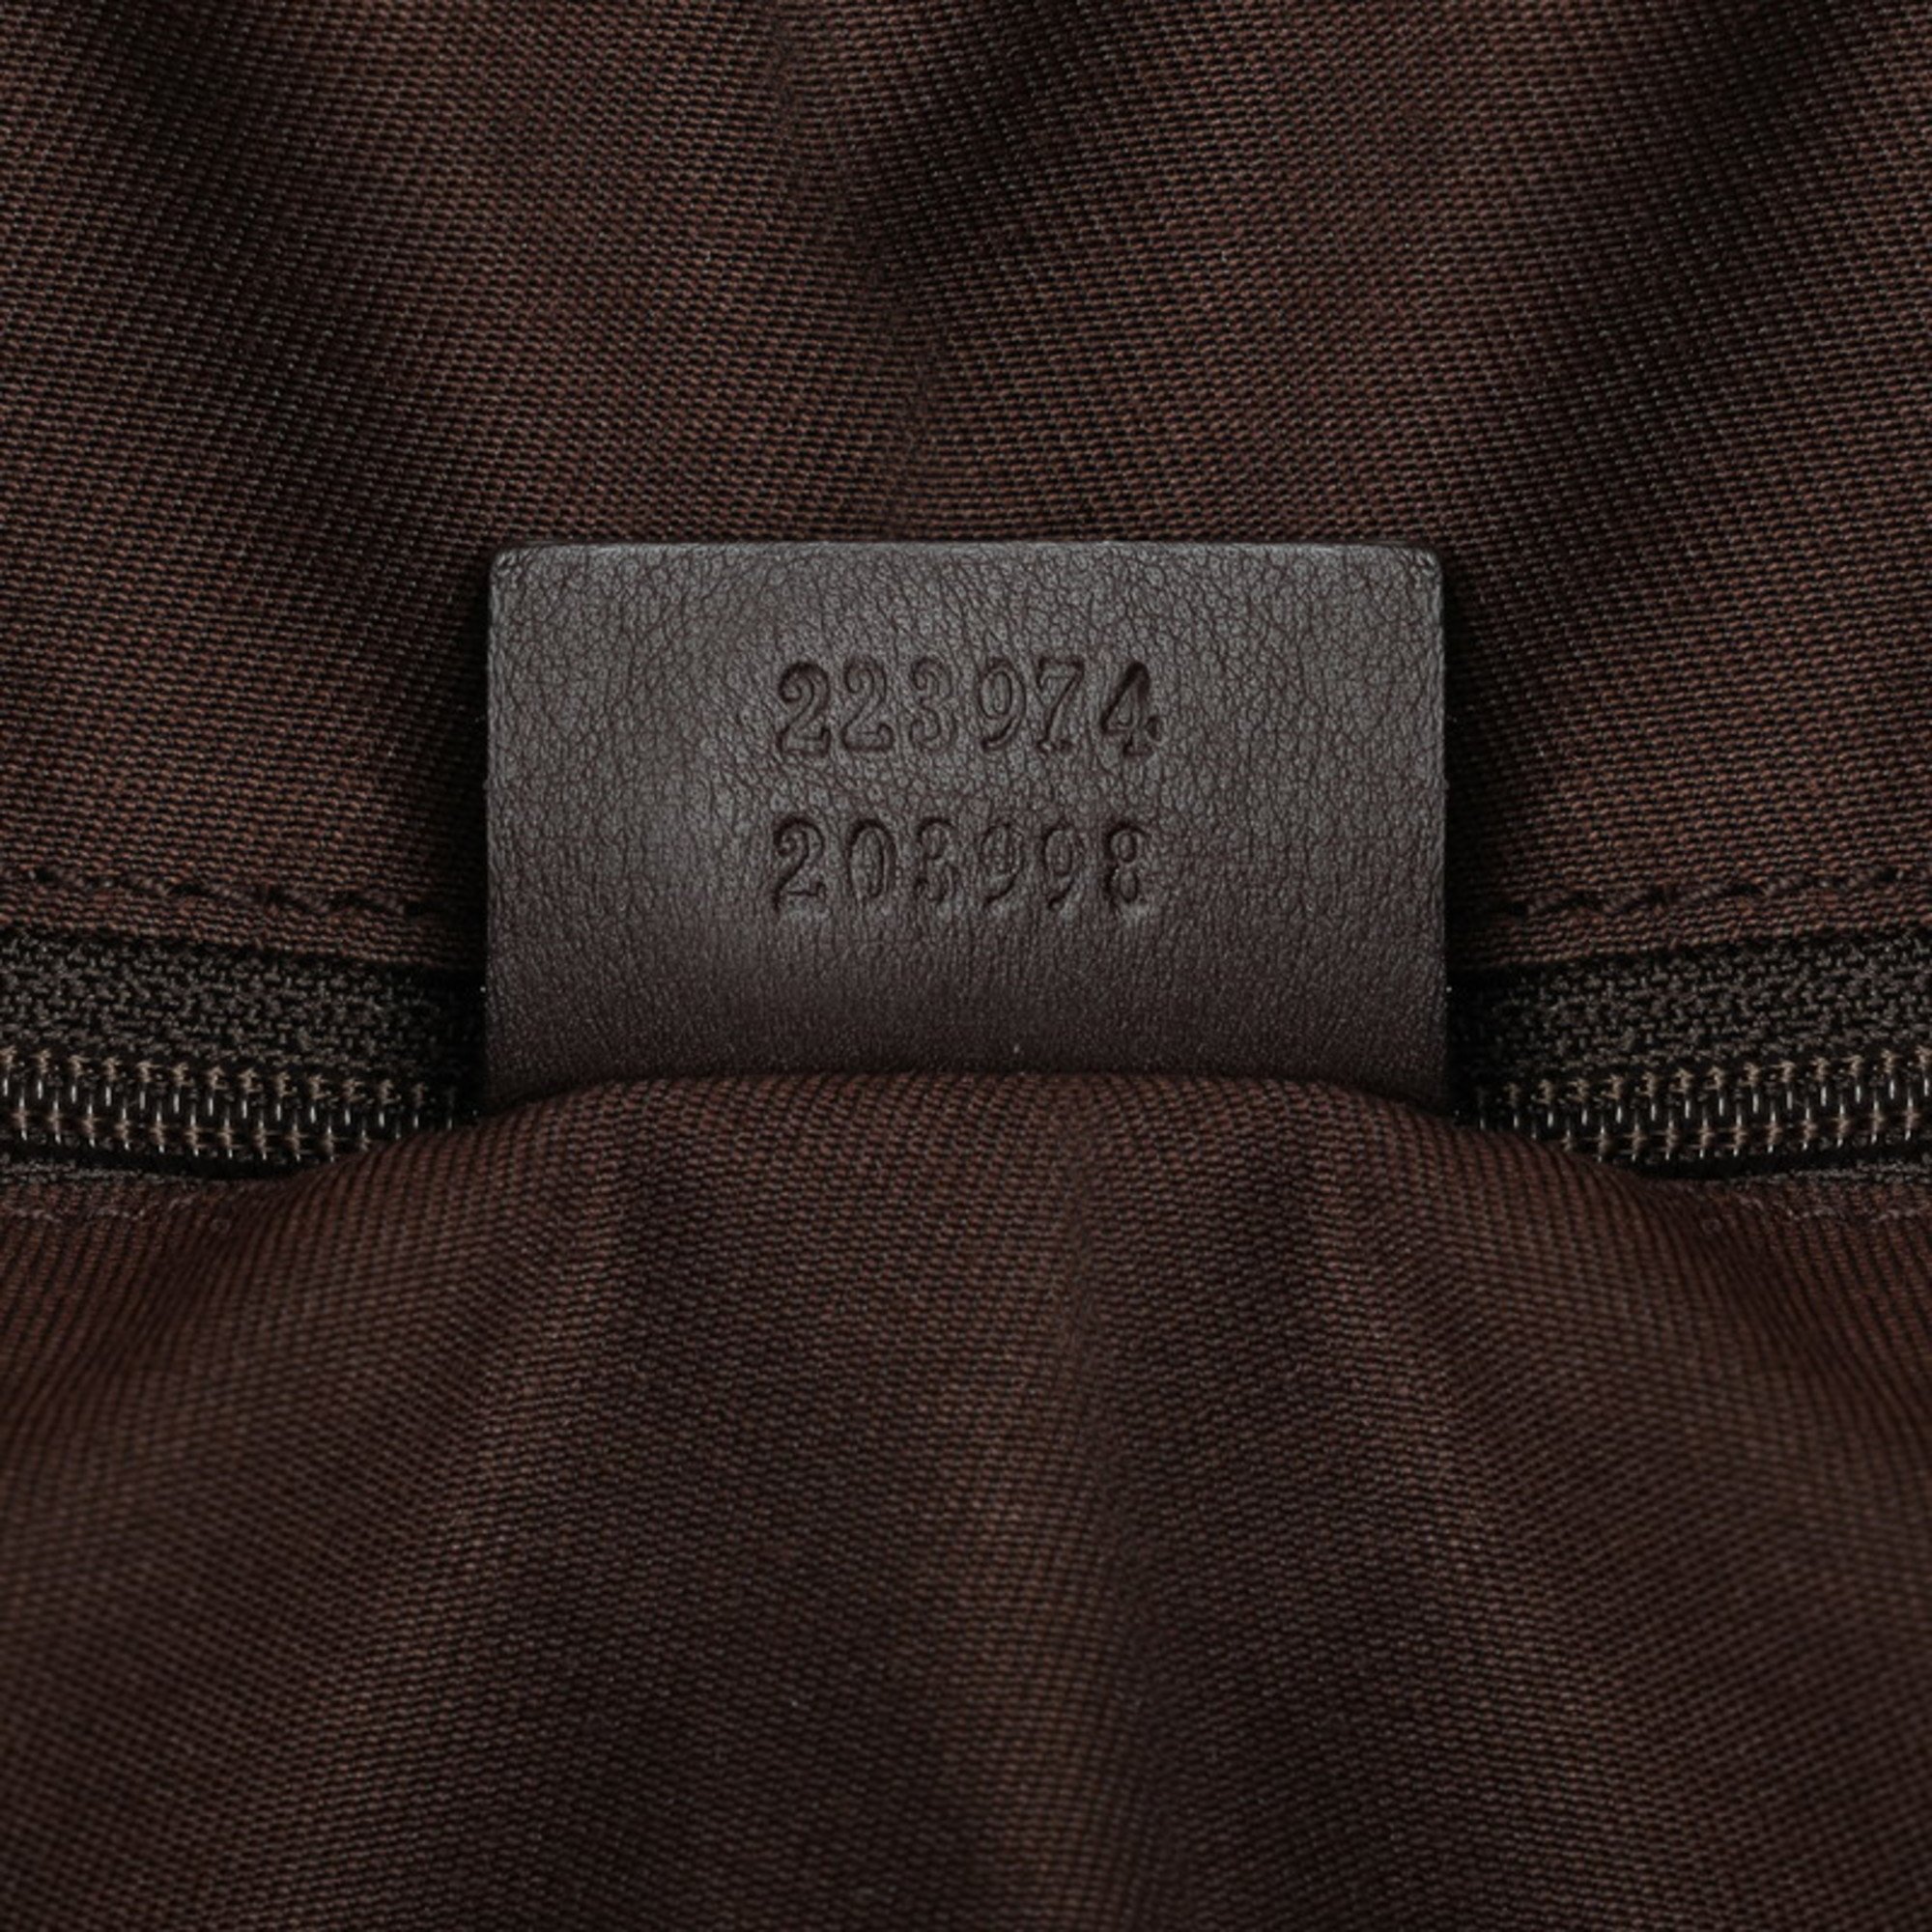 Gucci GG Canvas Sukey Tote Bag 223974 Beige Brown Leather Women's GUCCI